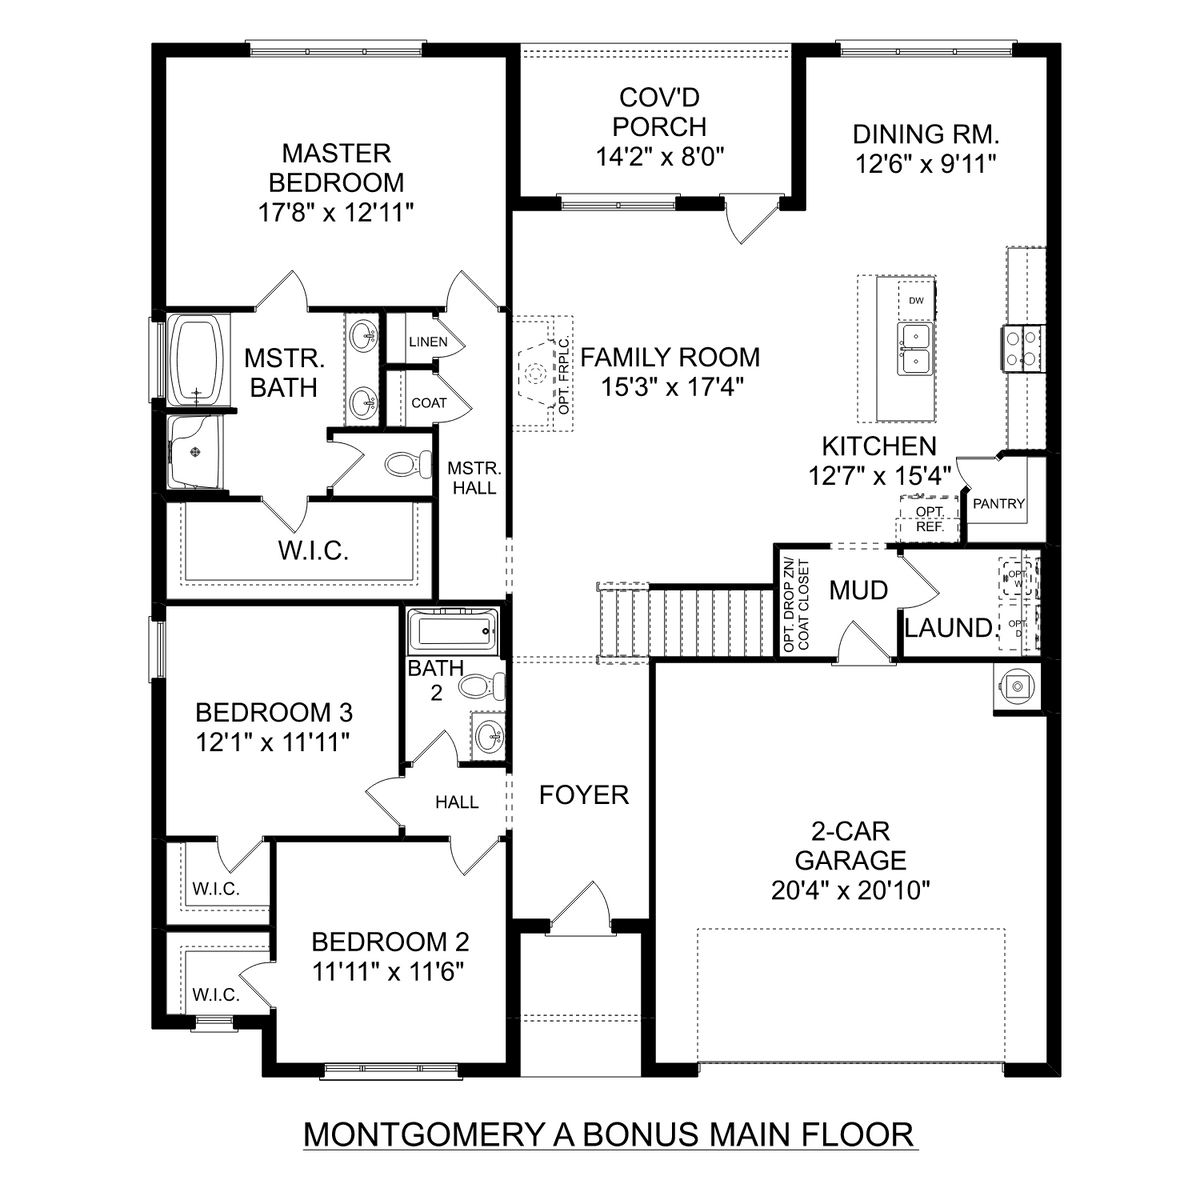 1 - The Montgomery with Bonus floor plan layout for 601 Magnolia Cove Lane SW in Davidson Homes' Magnolia Preserve community.